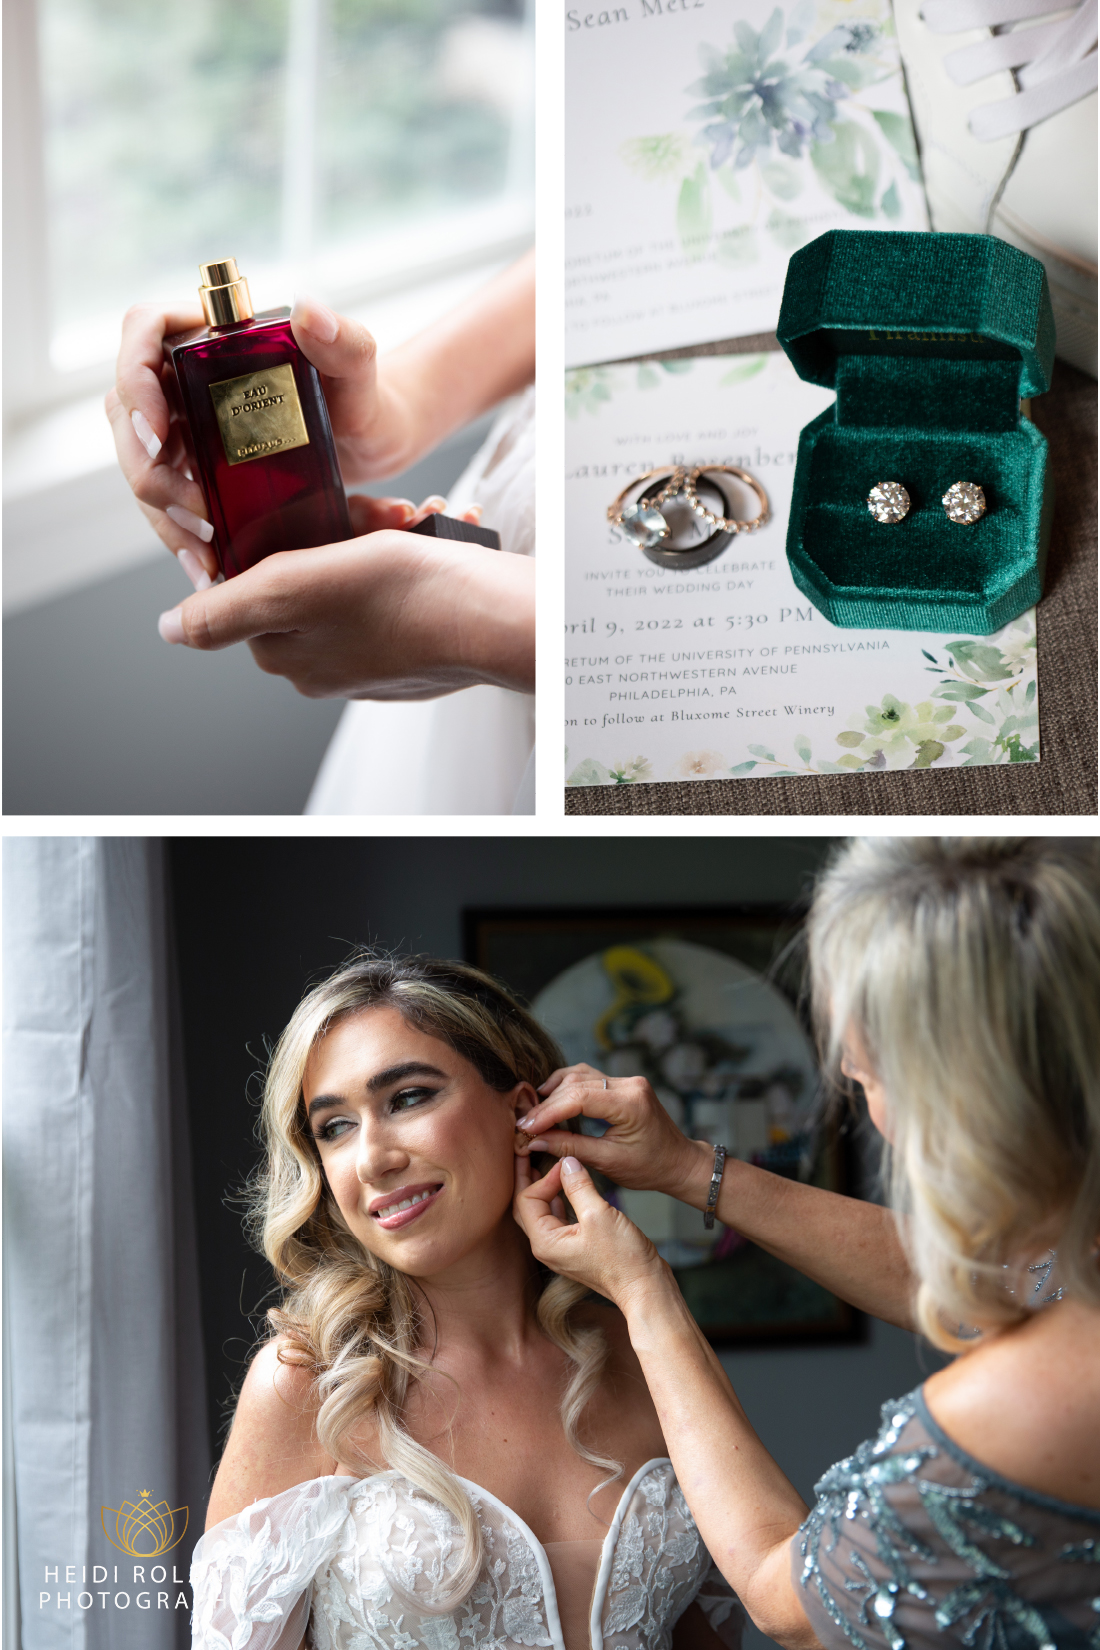 bridal wedding day details perfume and diamond earrings